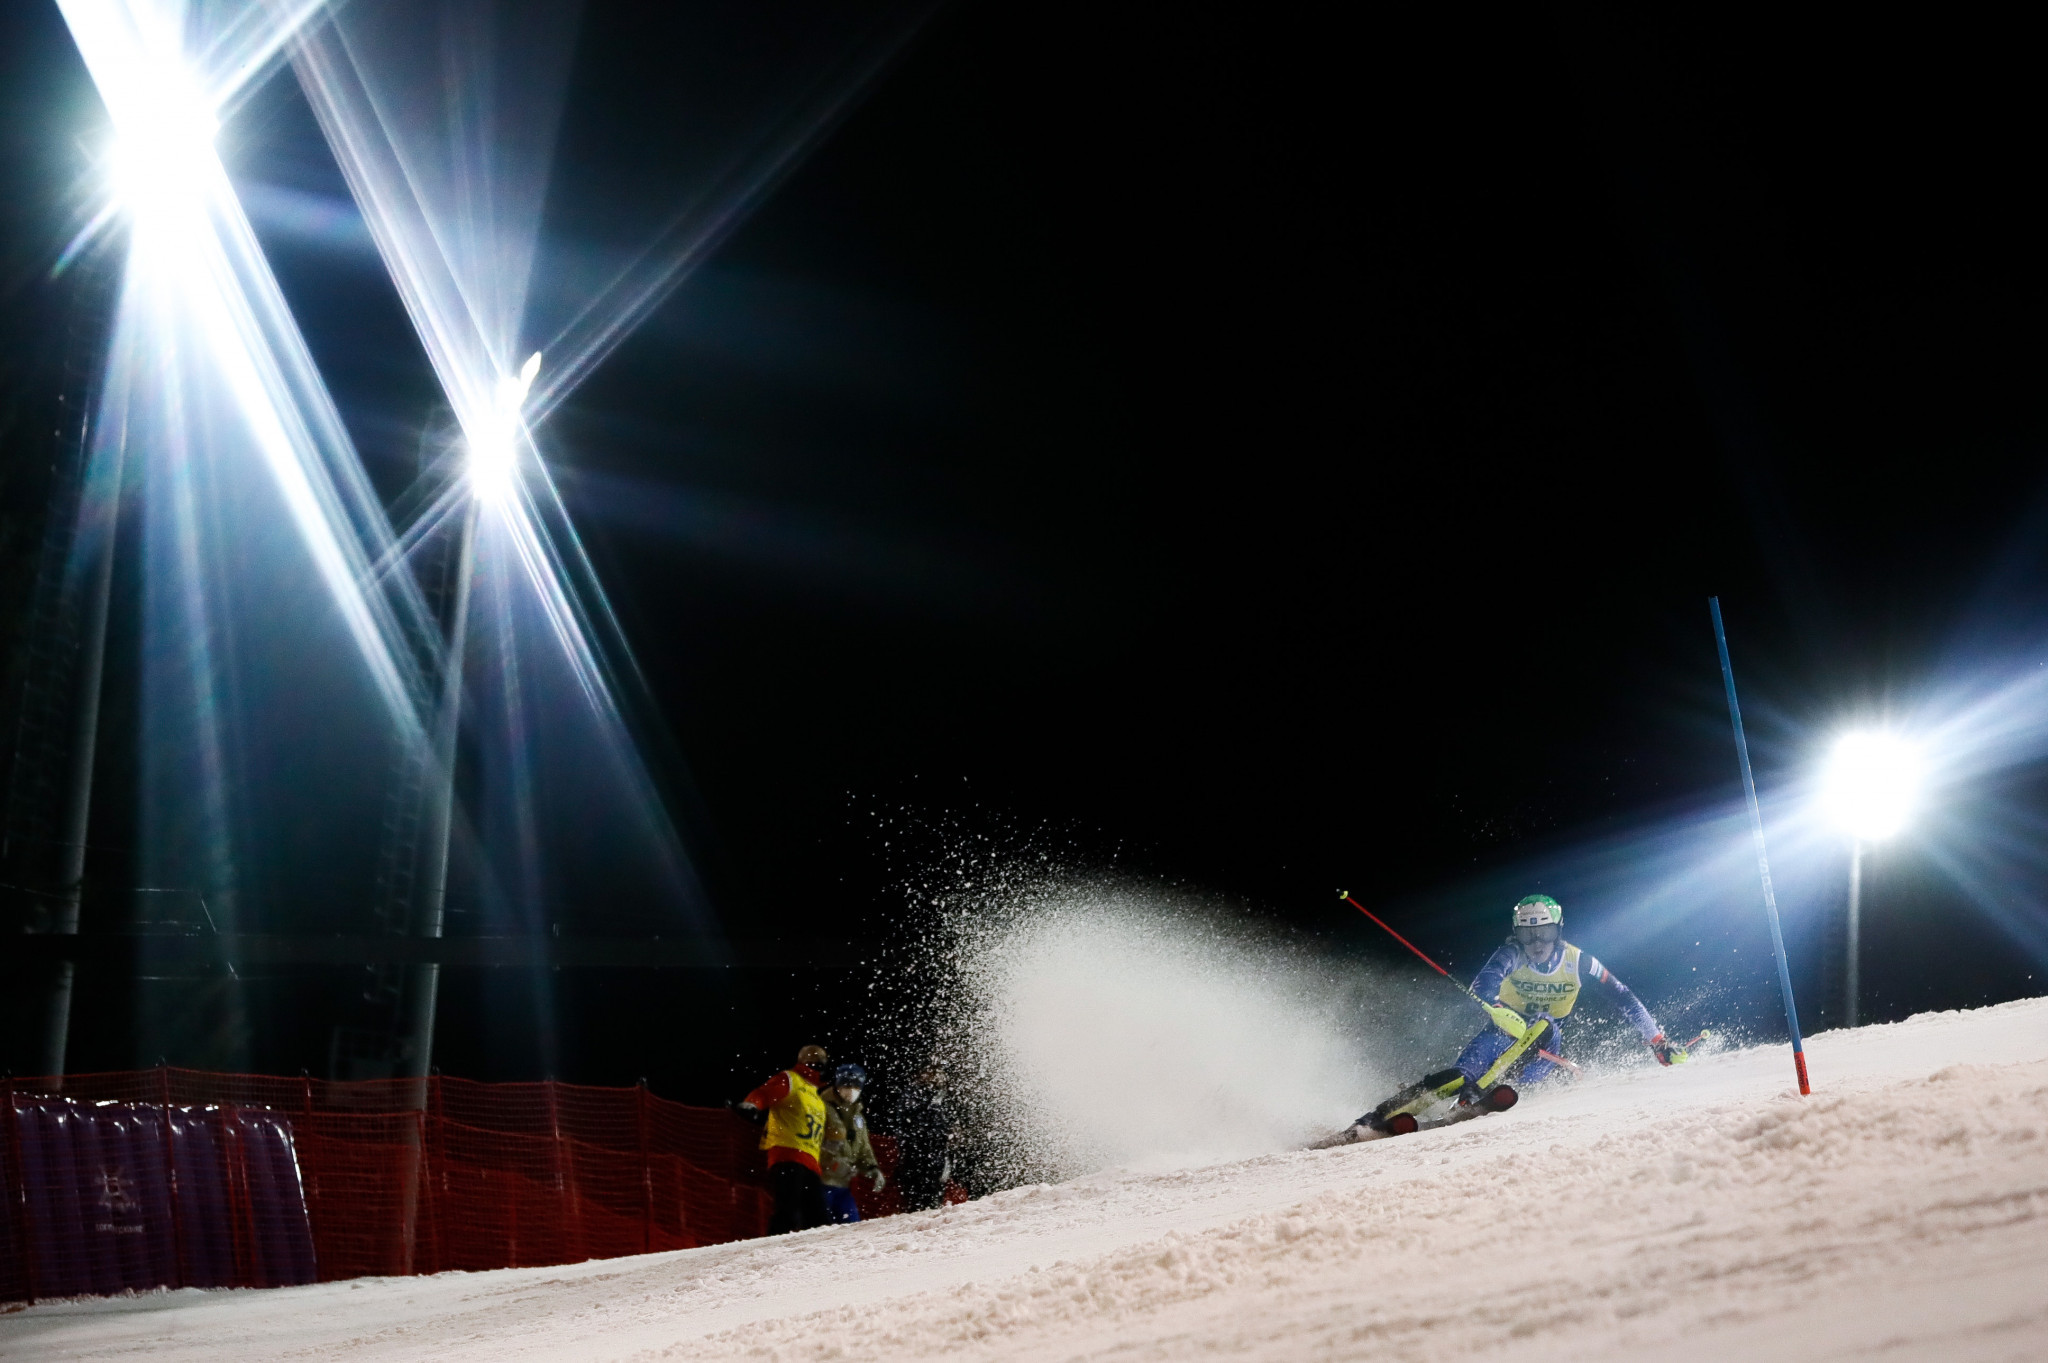 Night slalom to be contested at Alpine Ski World Cup in Madonna di Campiglio